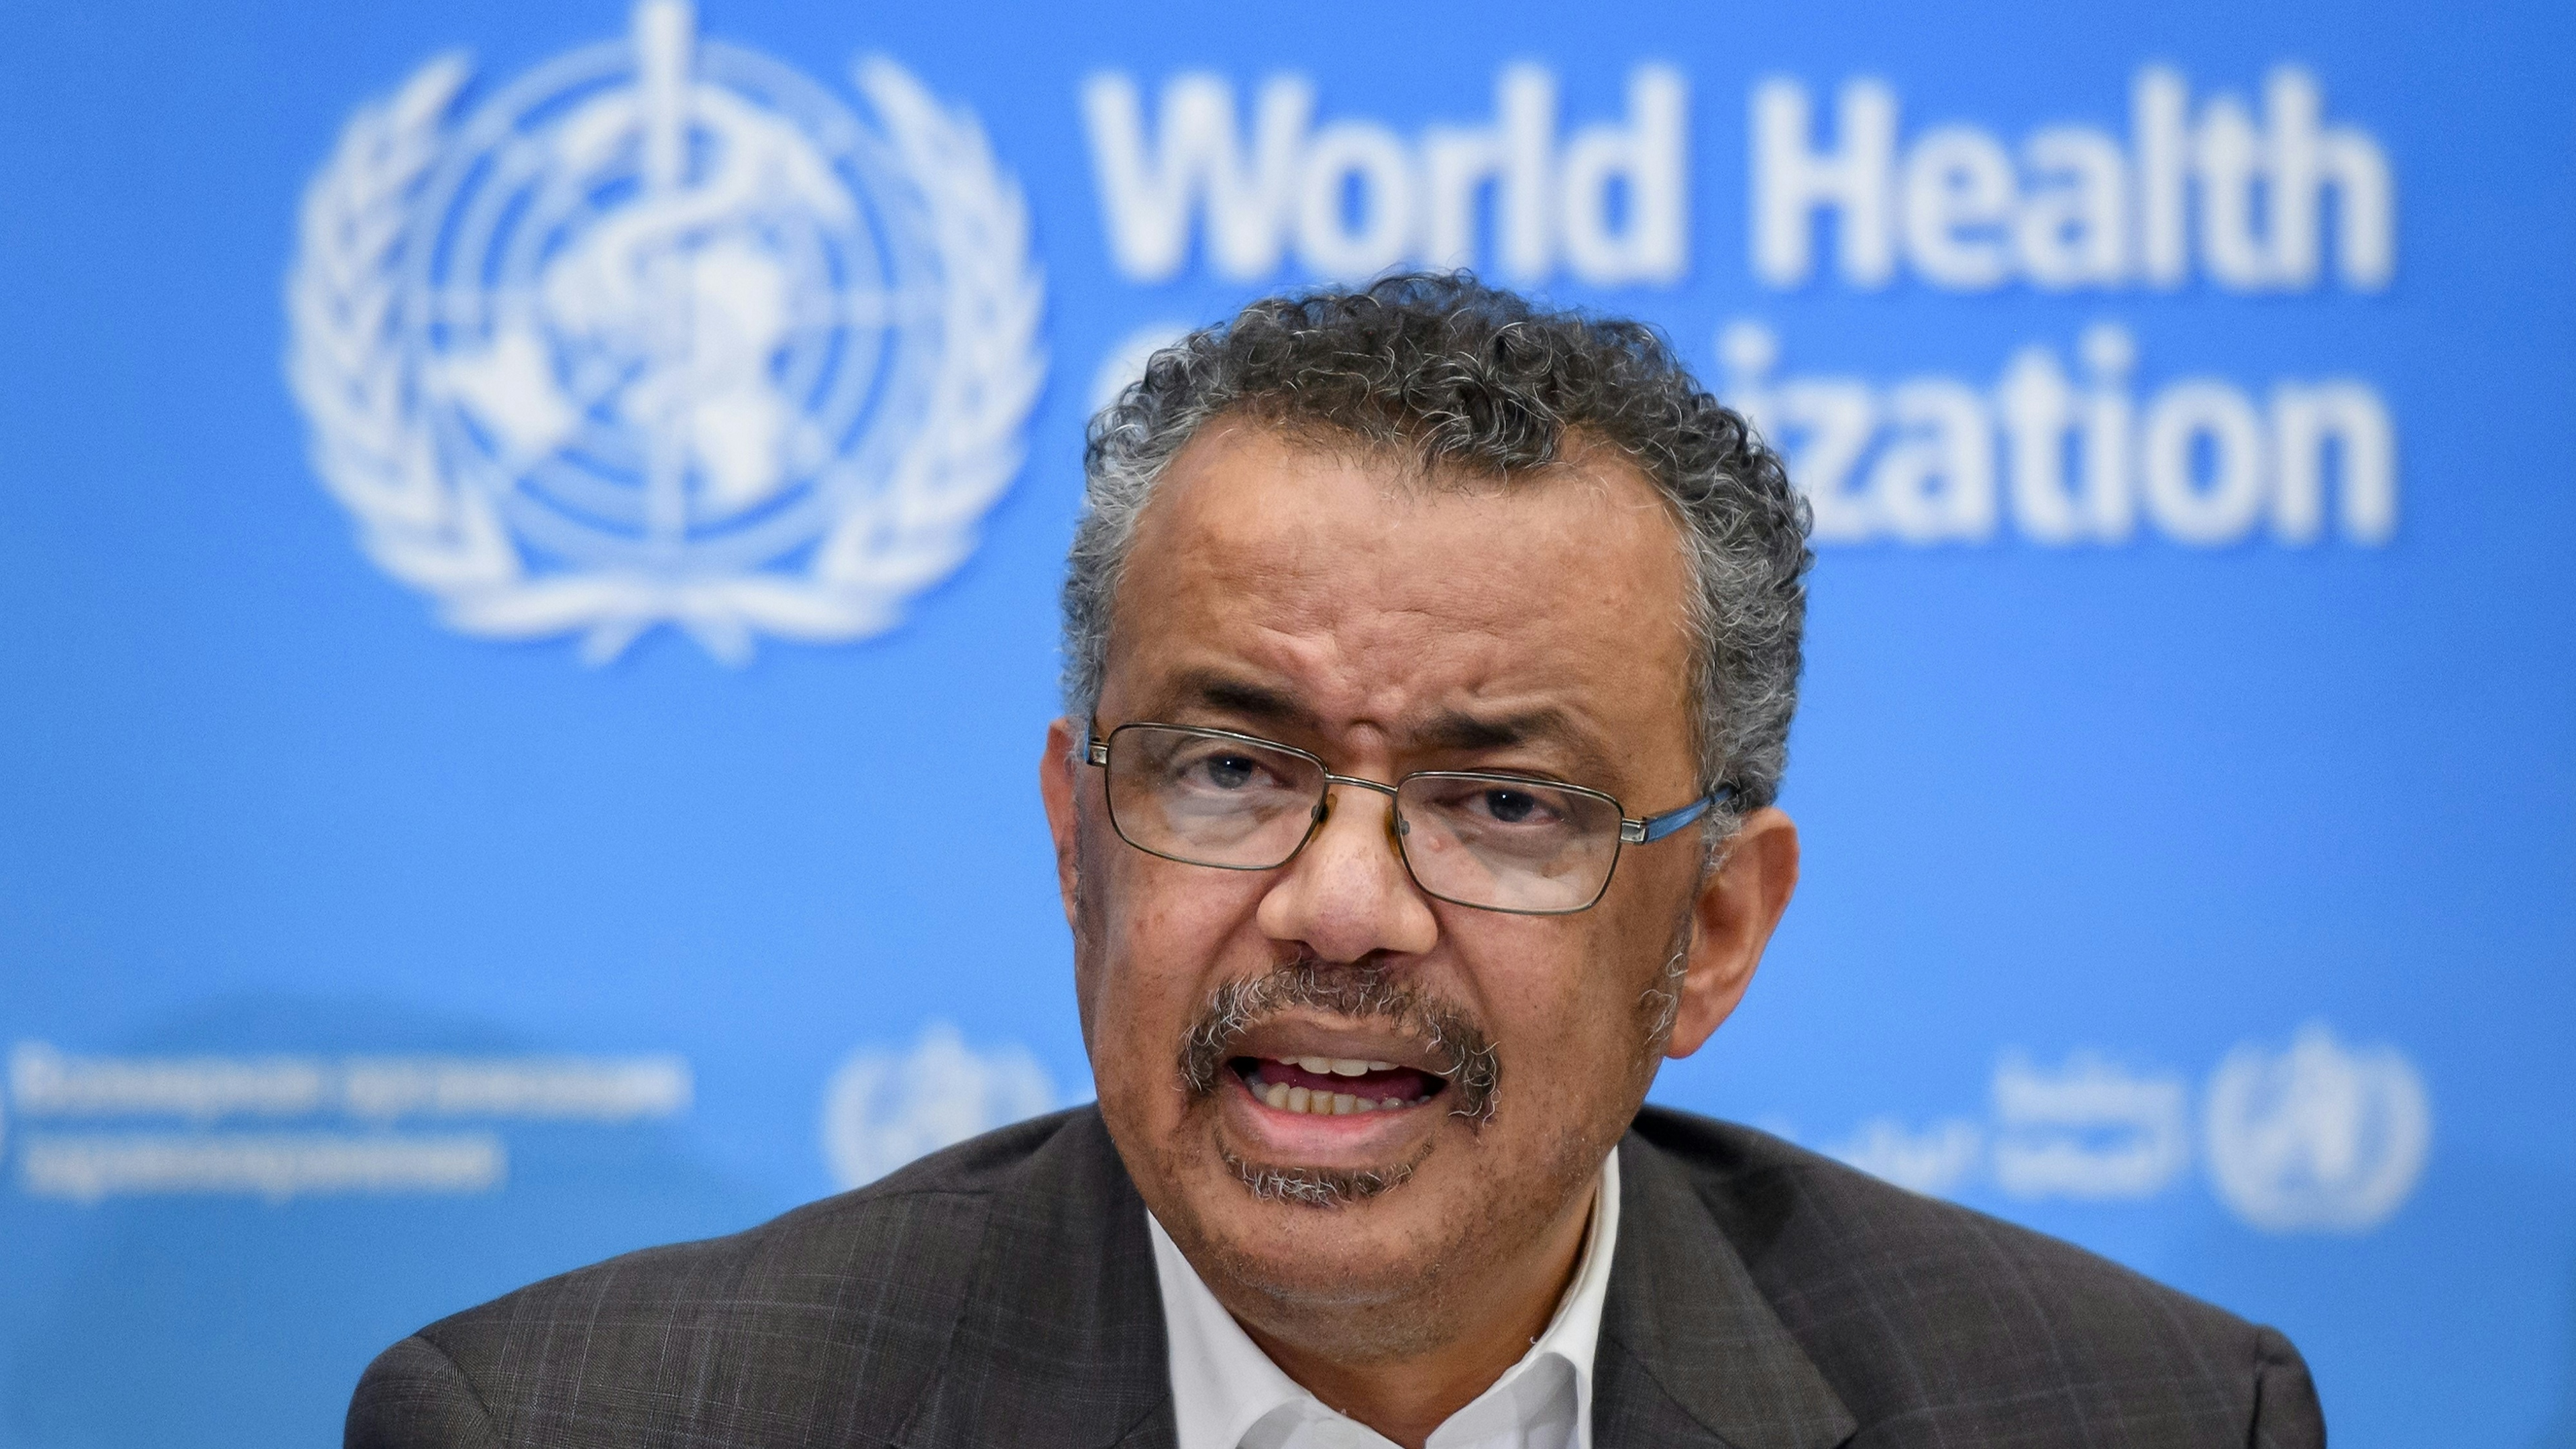 World Health Organization Director-General Tedros Adhanom Ghebreyesus speaks during a press conference in January 2020.